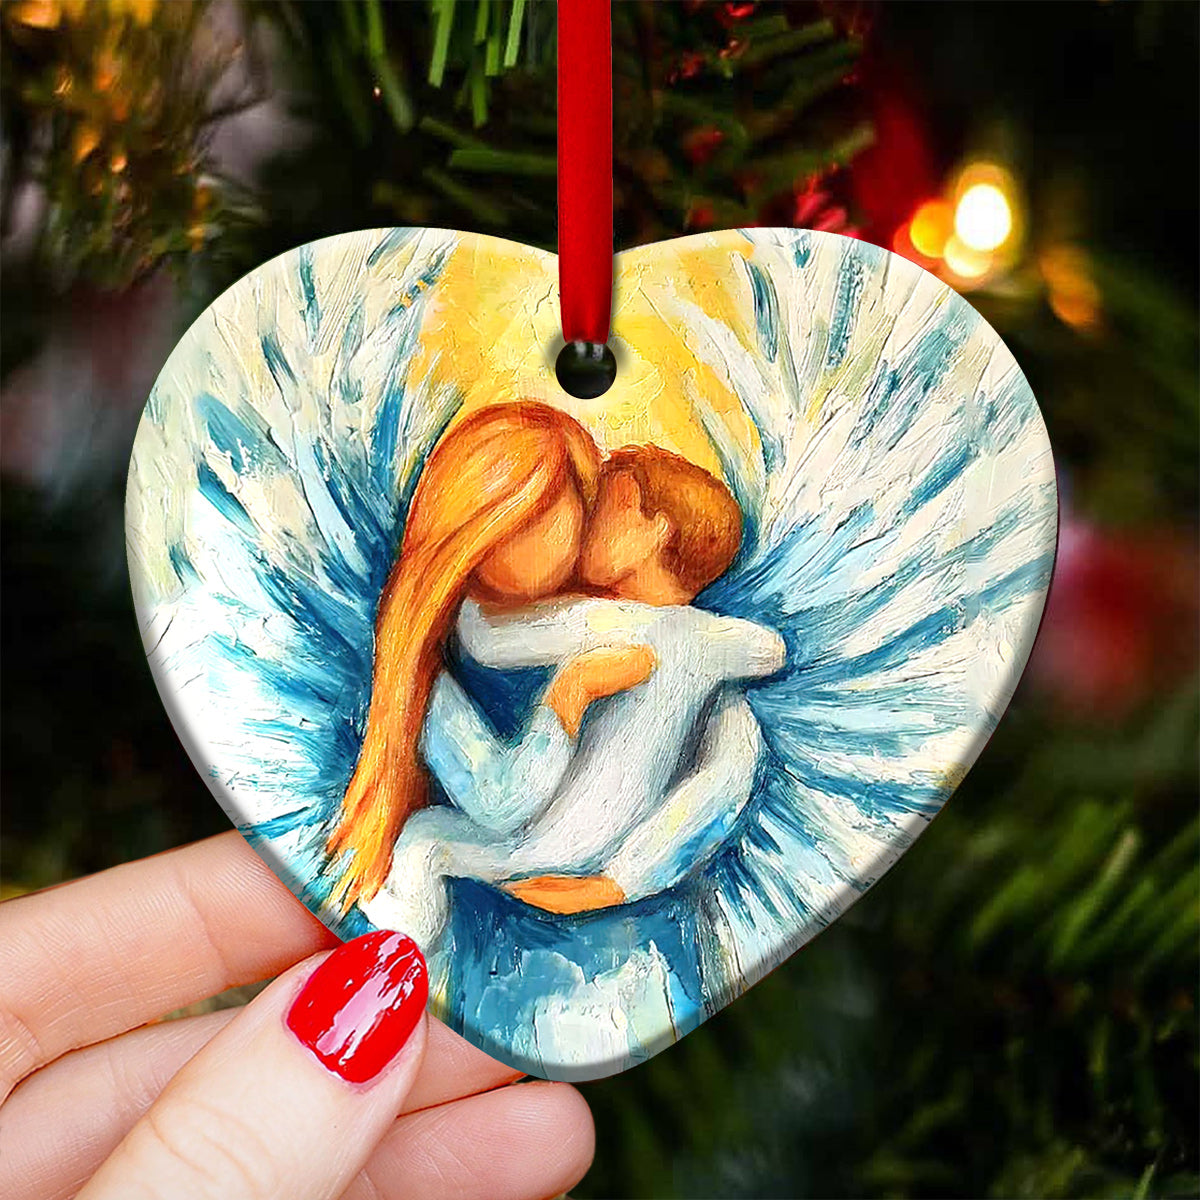 Nbc Angel 4 Heart Ceramic Ornament - Christmas Ornament - Christmas Gift